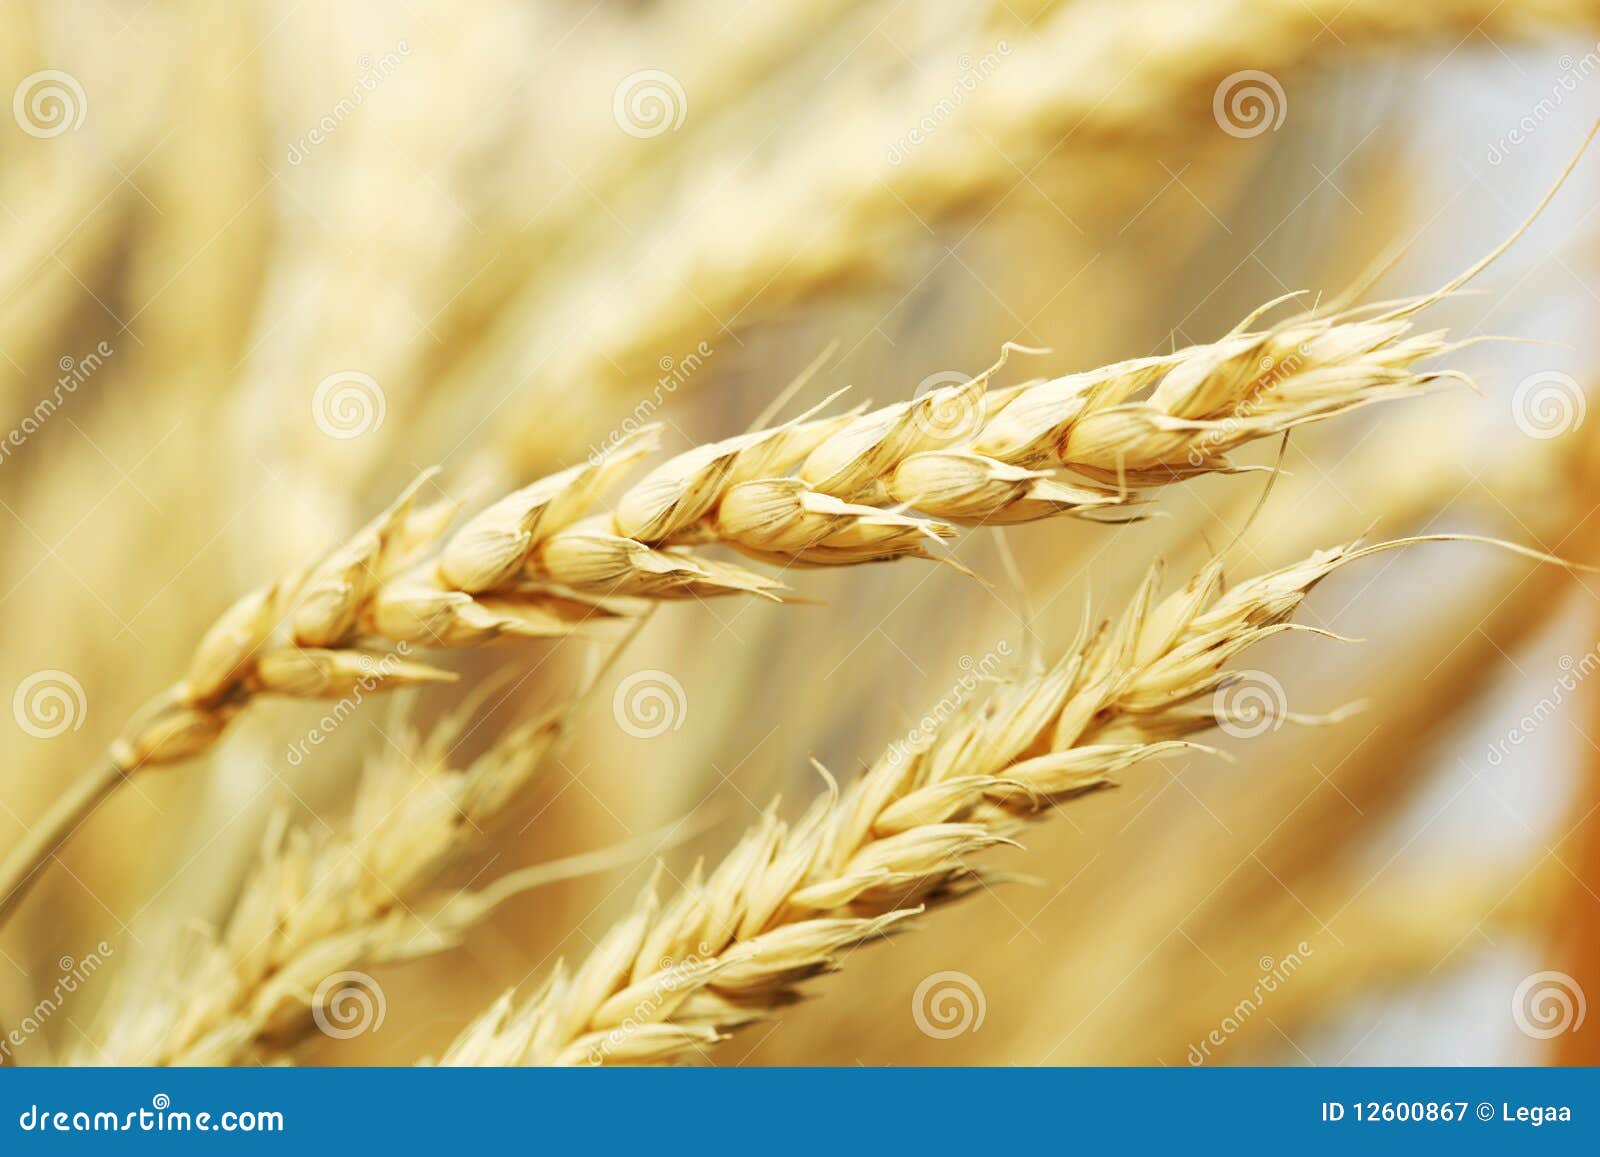 golden wheat close-up